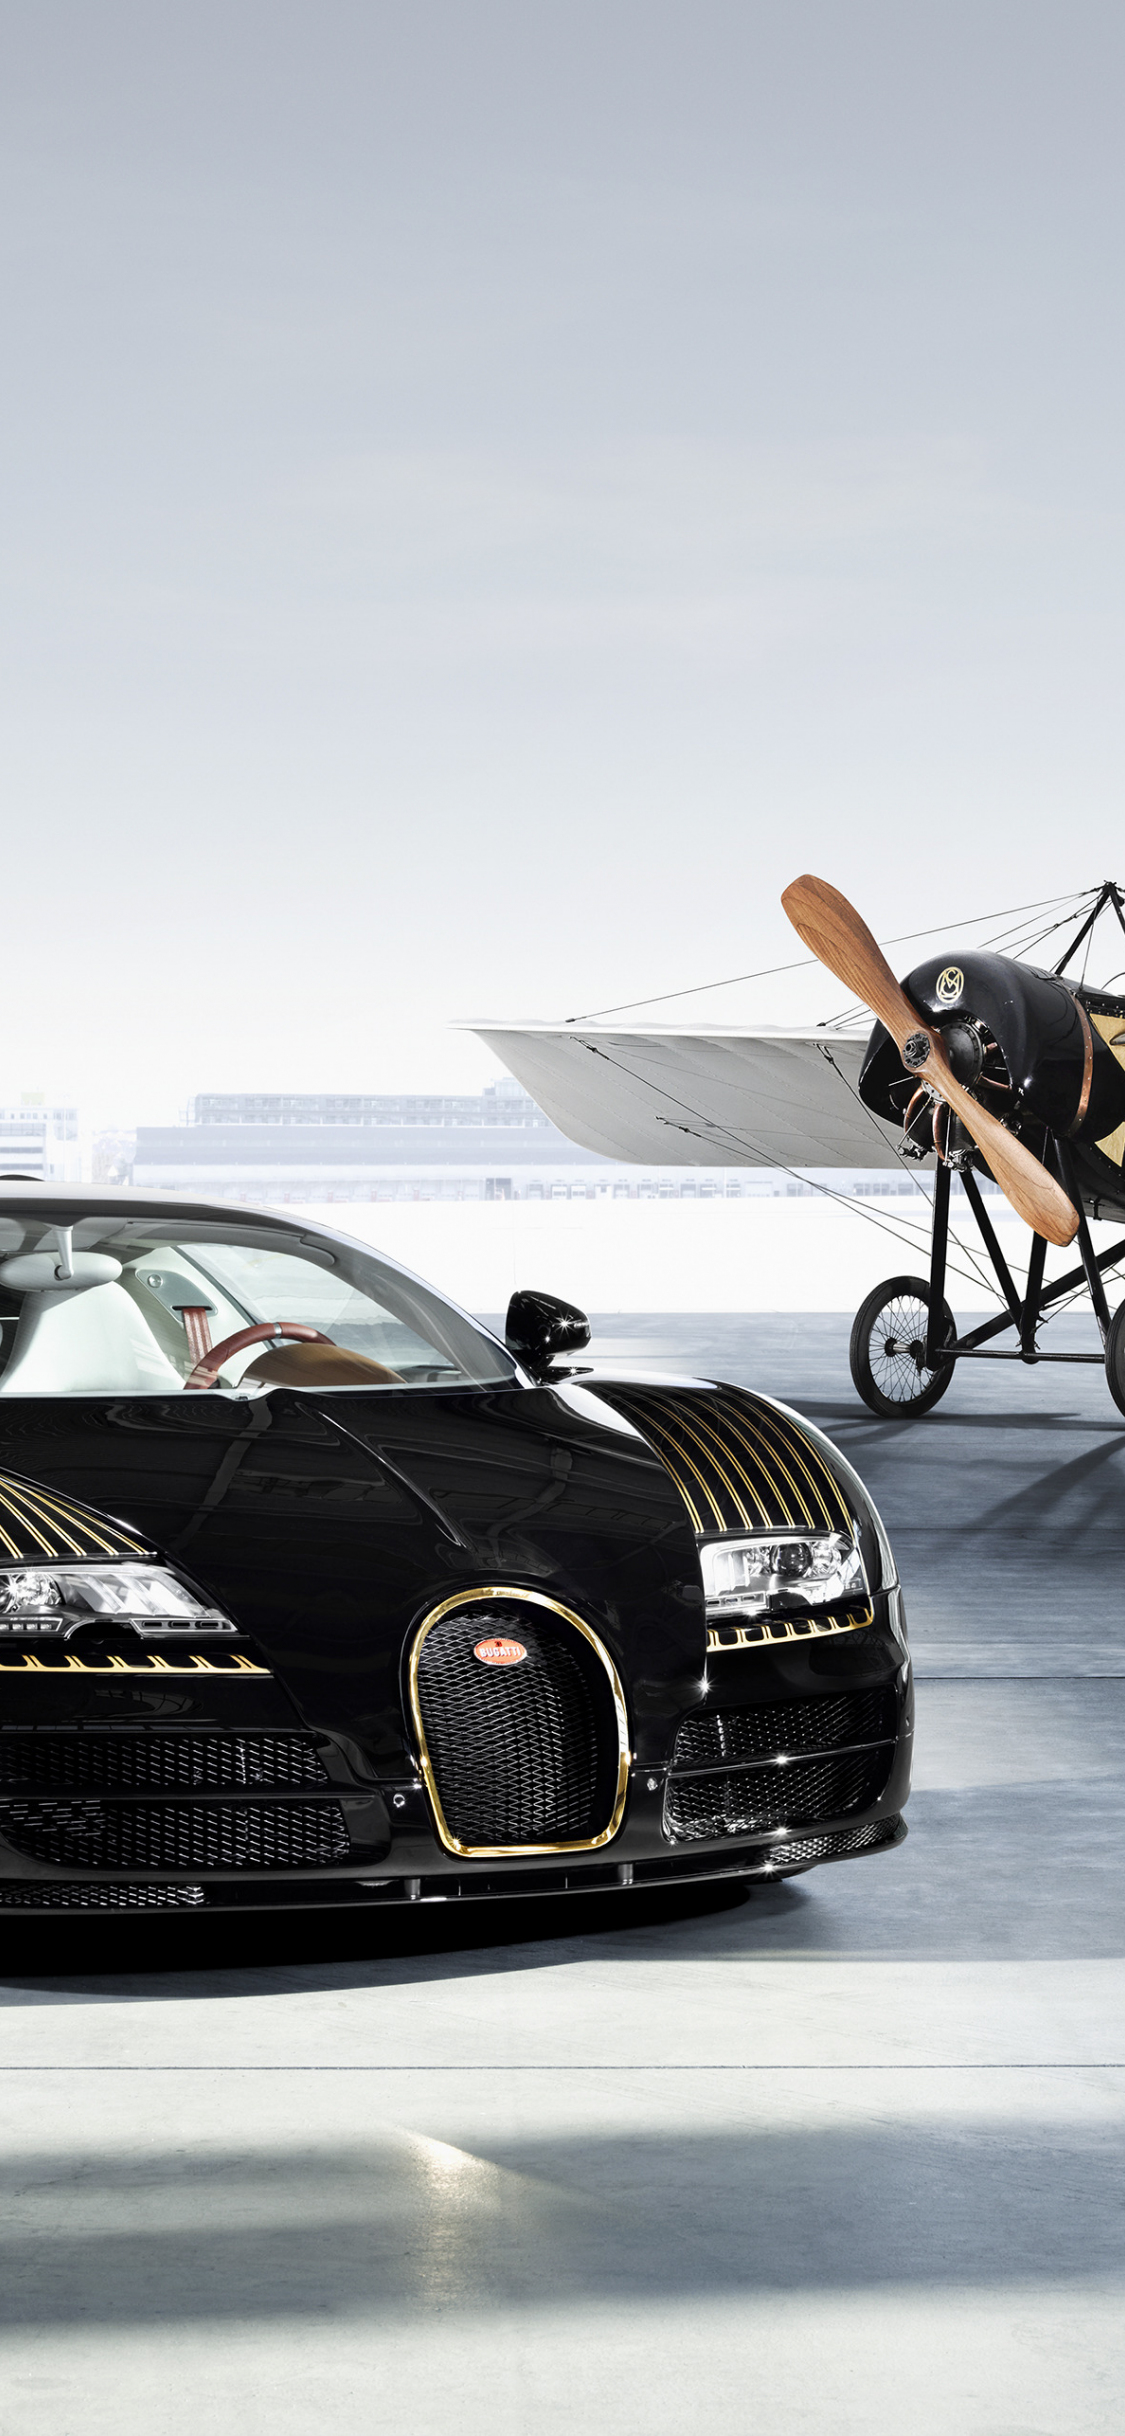 Download wallpaper 1125x2436 bugatti veyron  grand sport vitesse, black  bess, aircraft, 4k, iphone x, 1125x2436 hd background, 1004